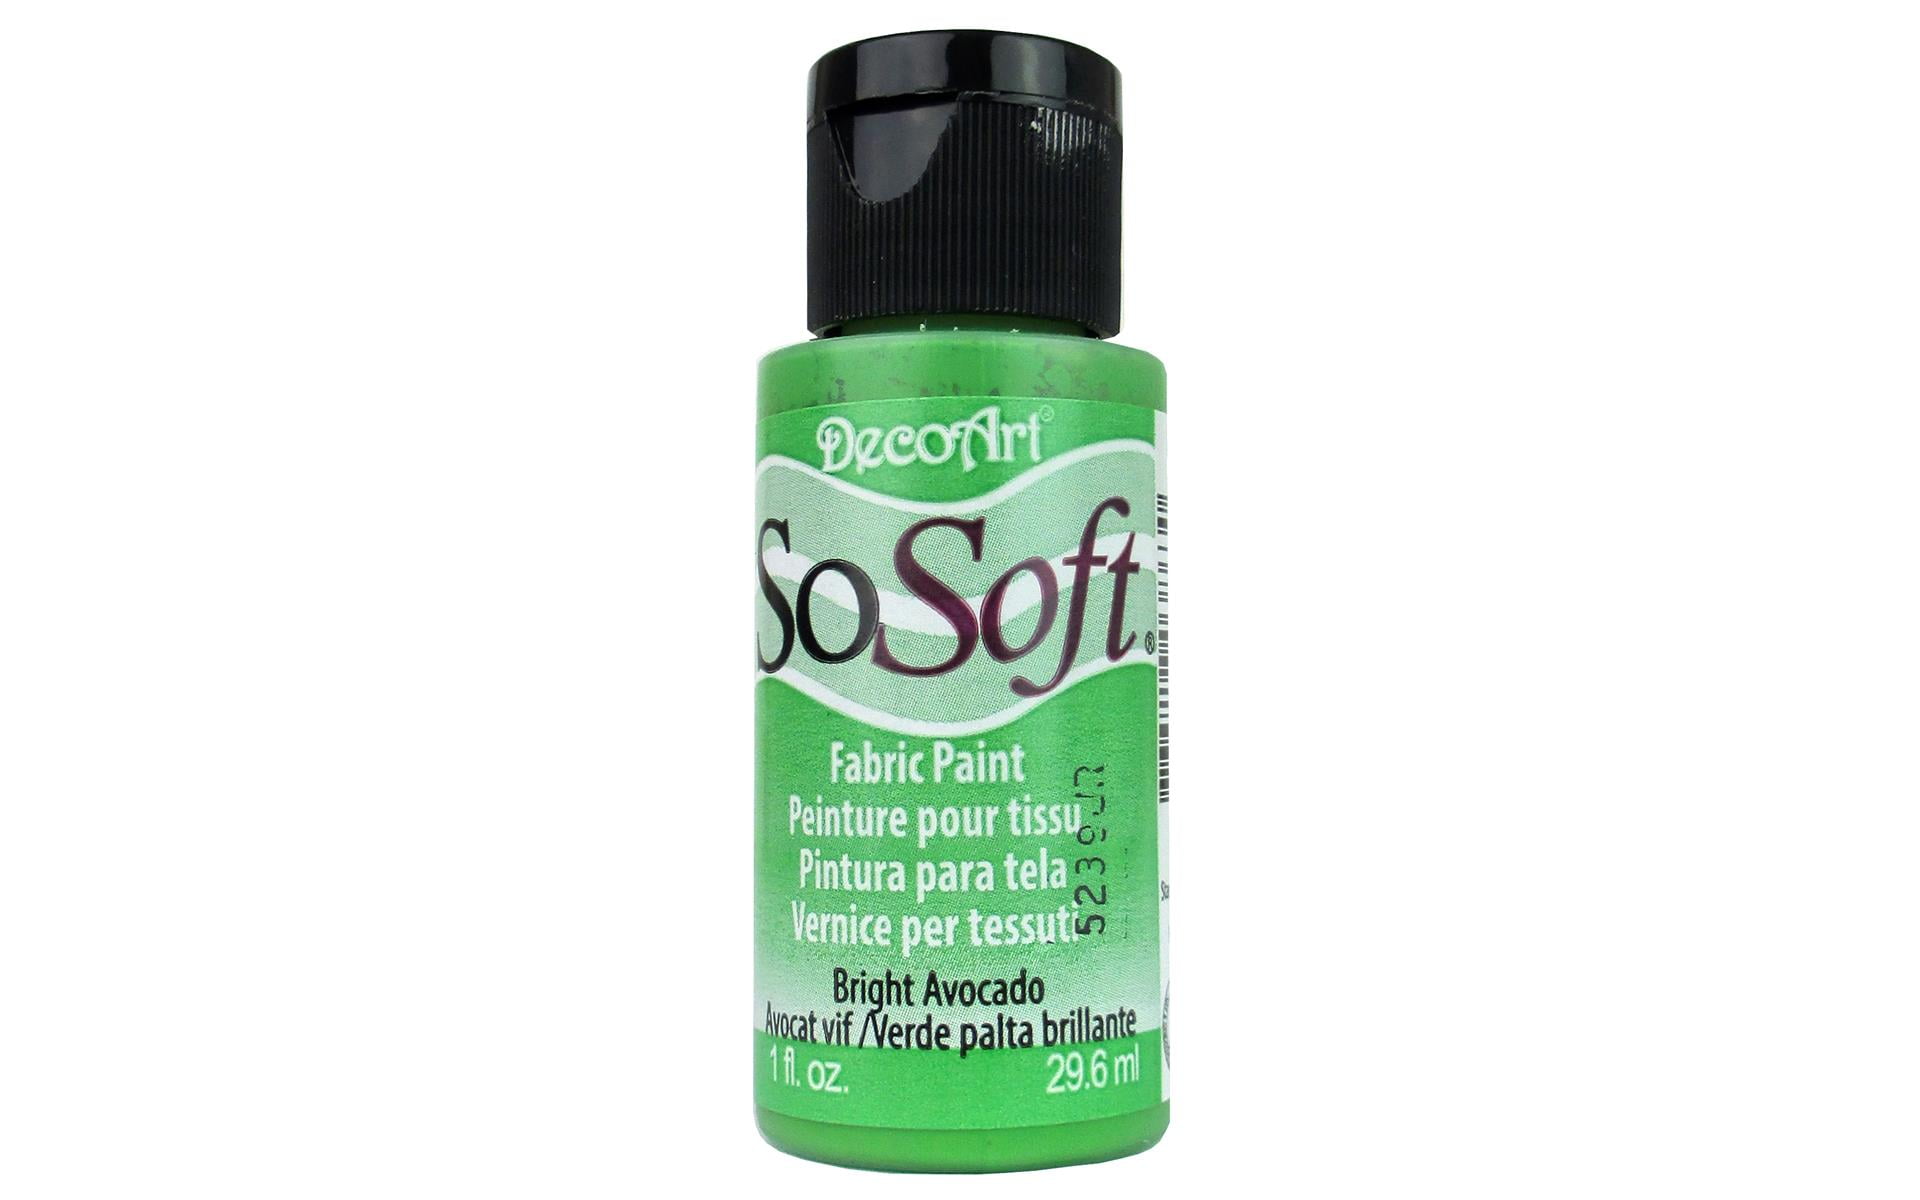 SoSoft Fabric Acrylic Paint 1oz-Avocado Green, Pk 6, Deco Art 